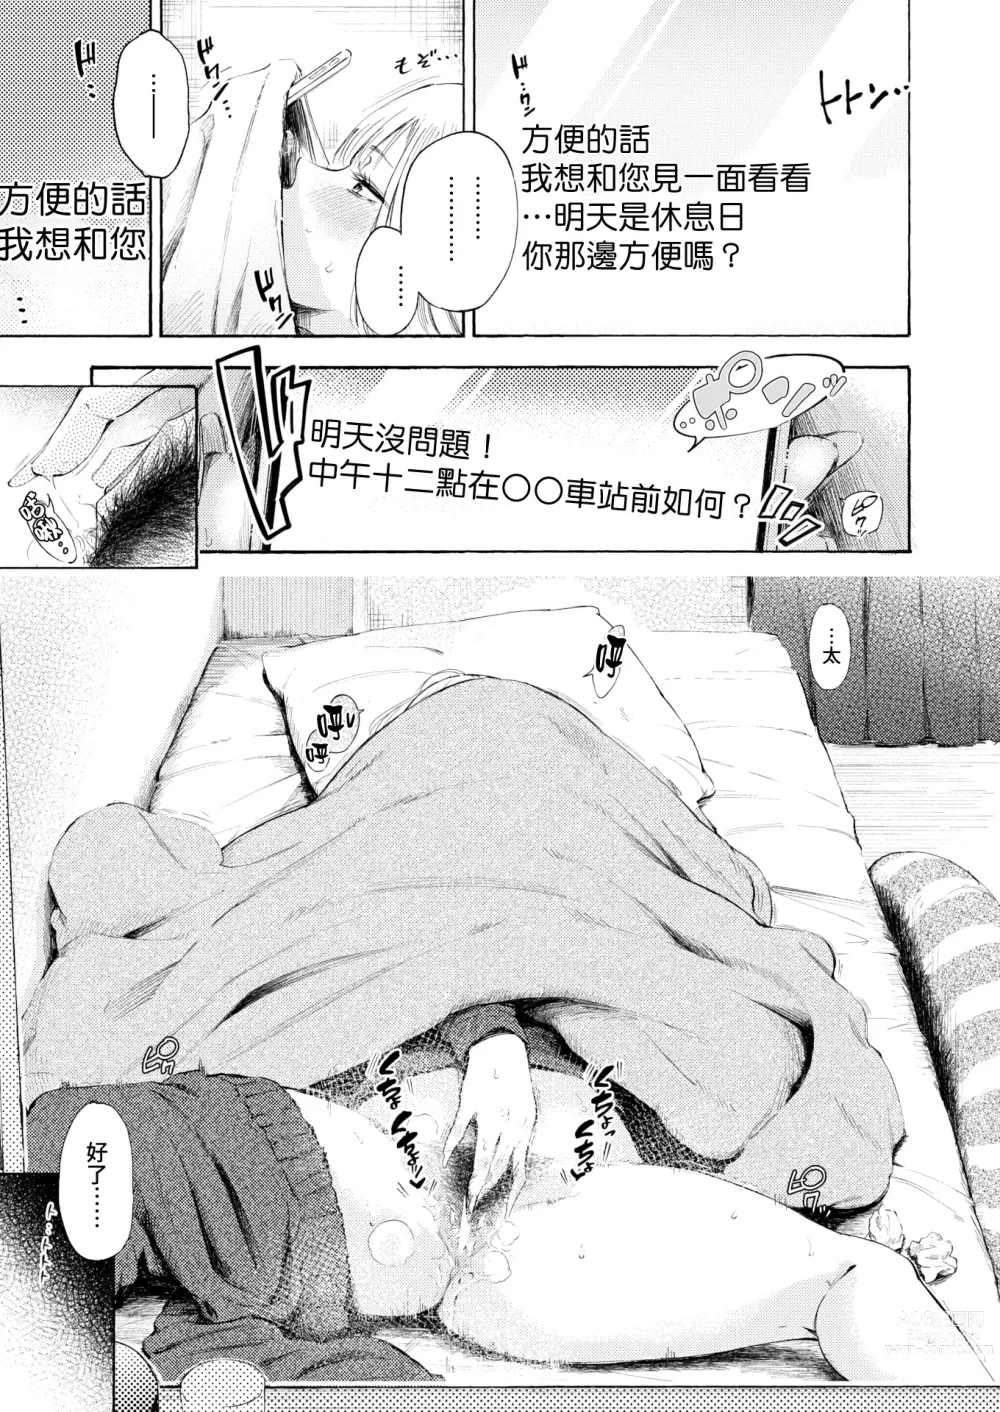 Page 7 of manga 好球區